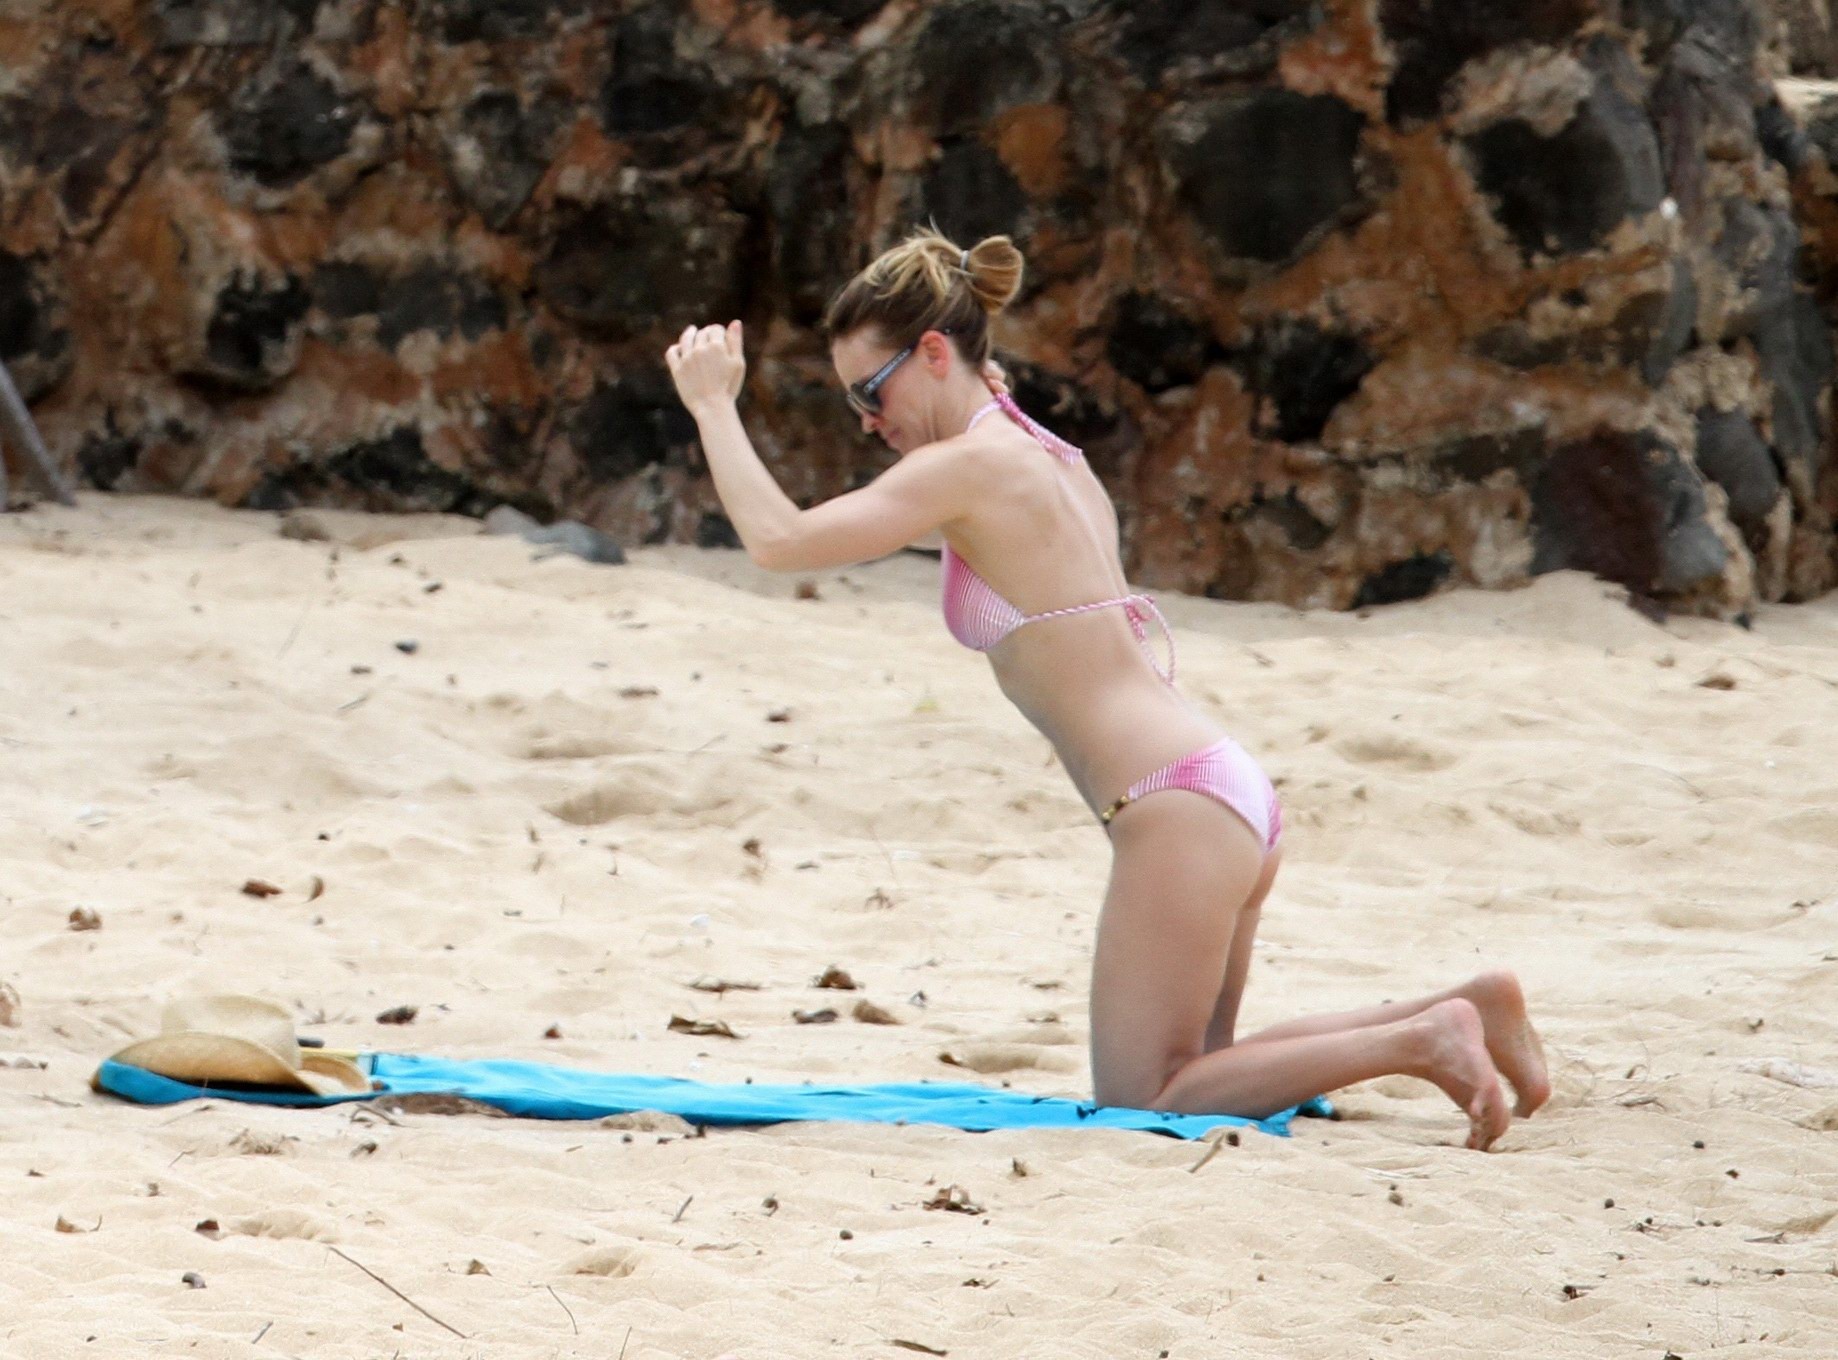 Hilary swank showig off ihre bikini körper auf dem strand
 #75308546